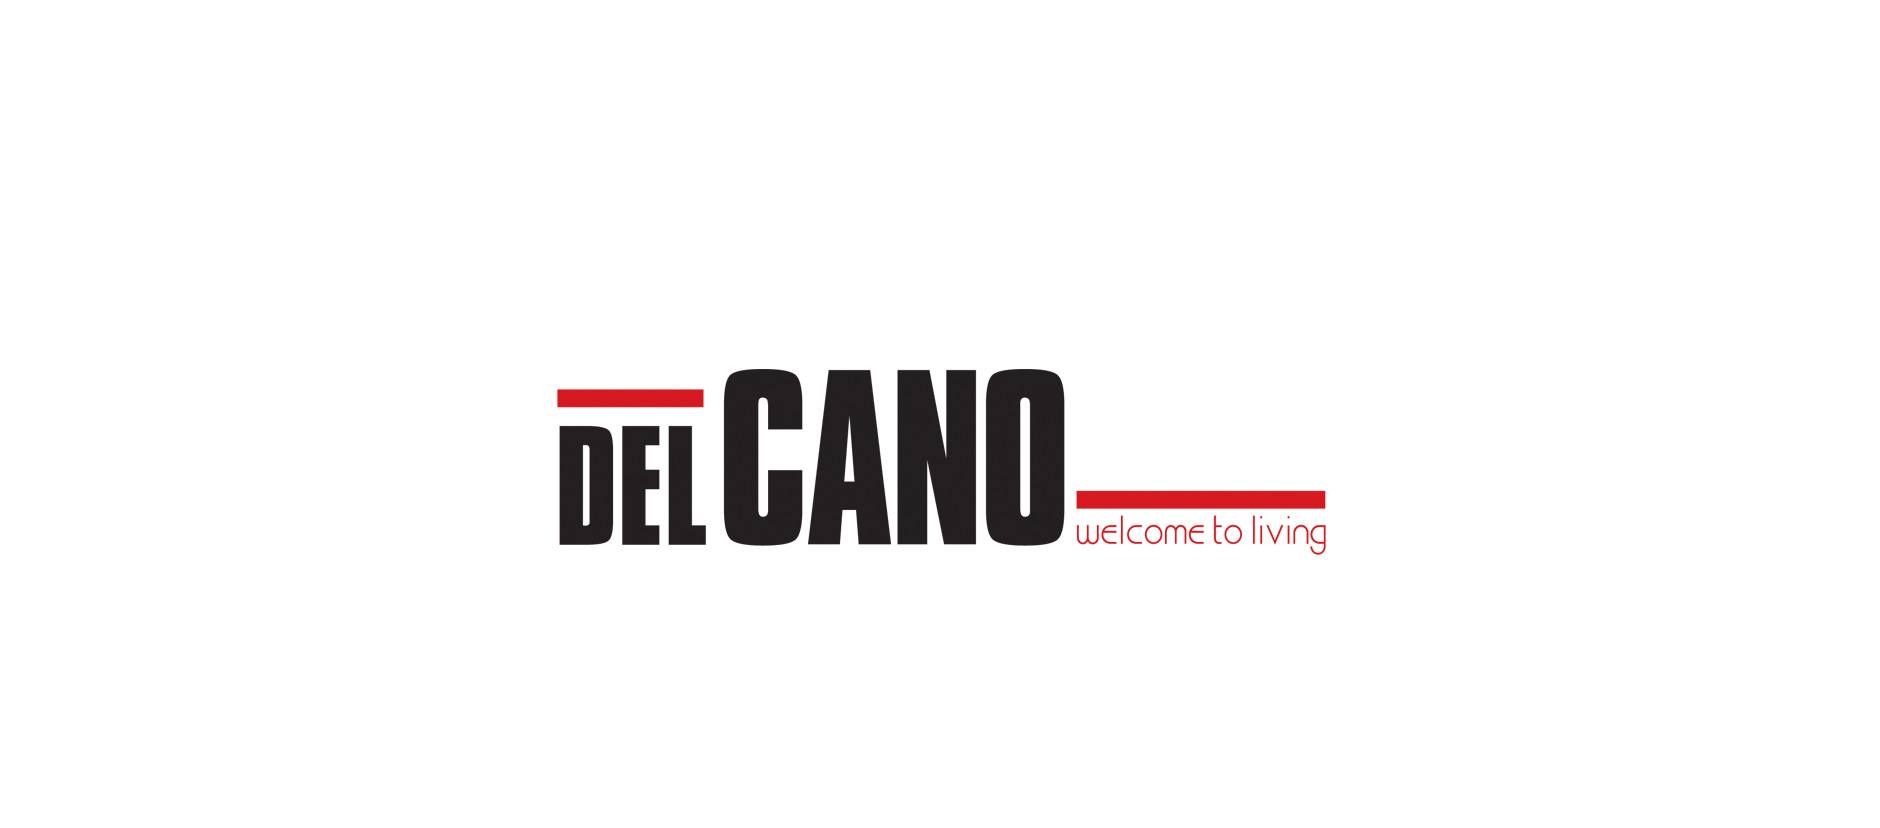 Del Cano Restaurant